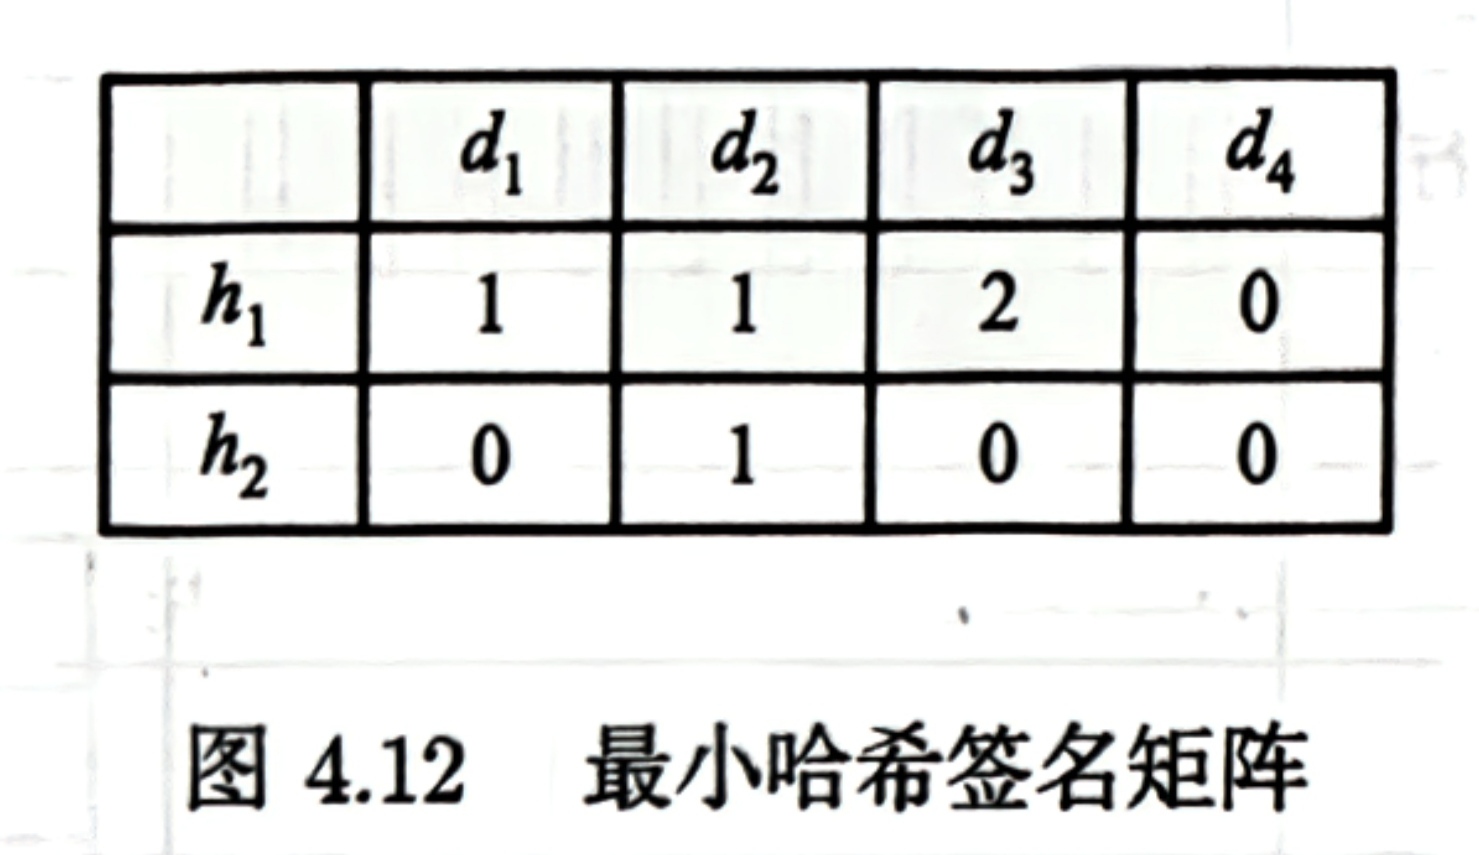 min-hashing-signature-matrix-2